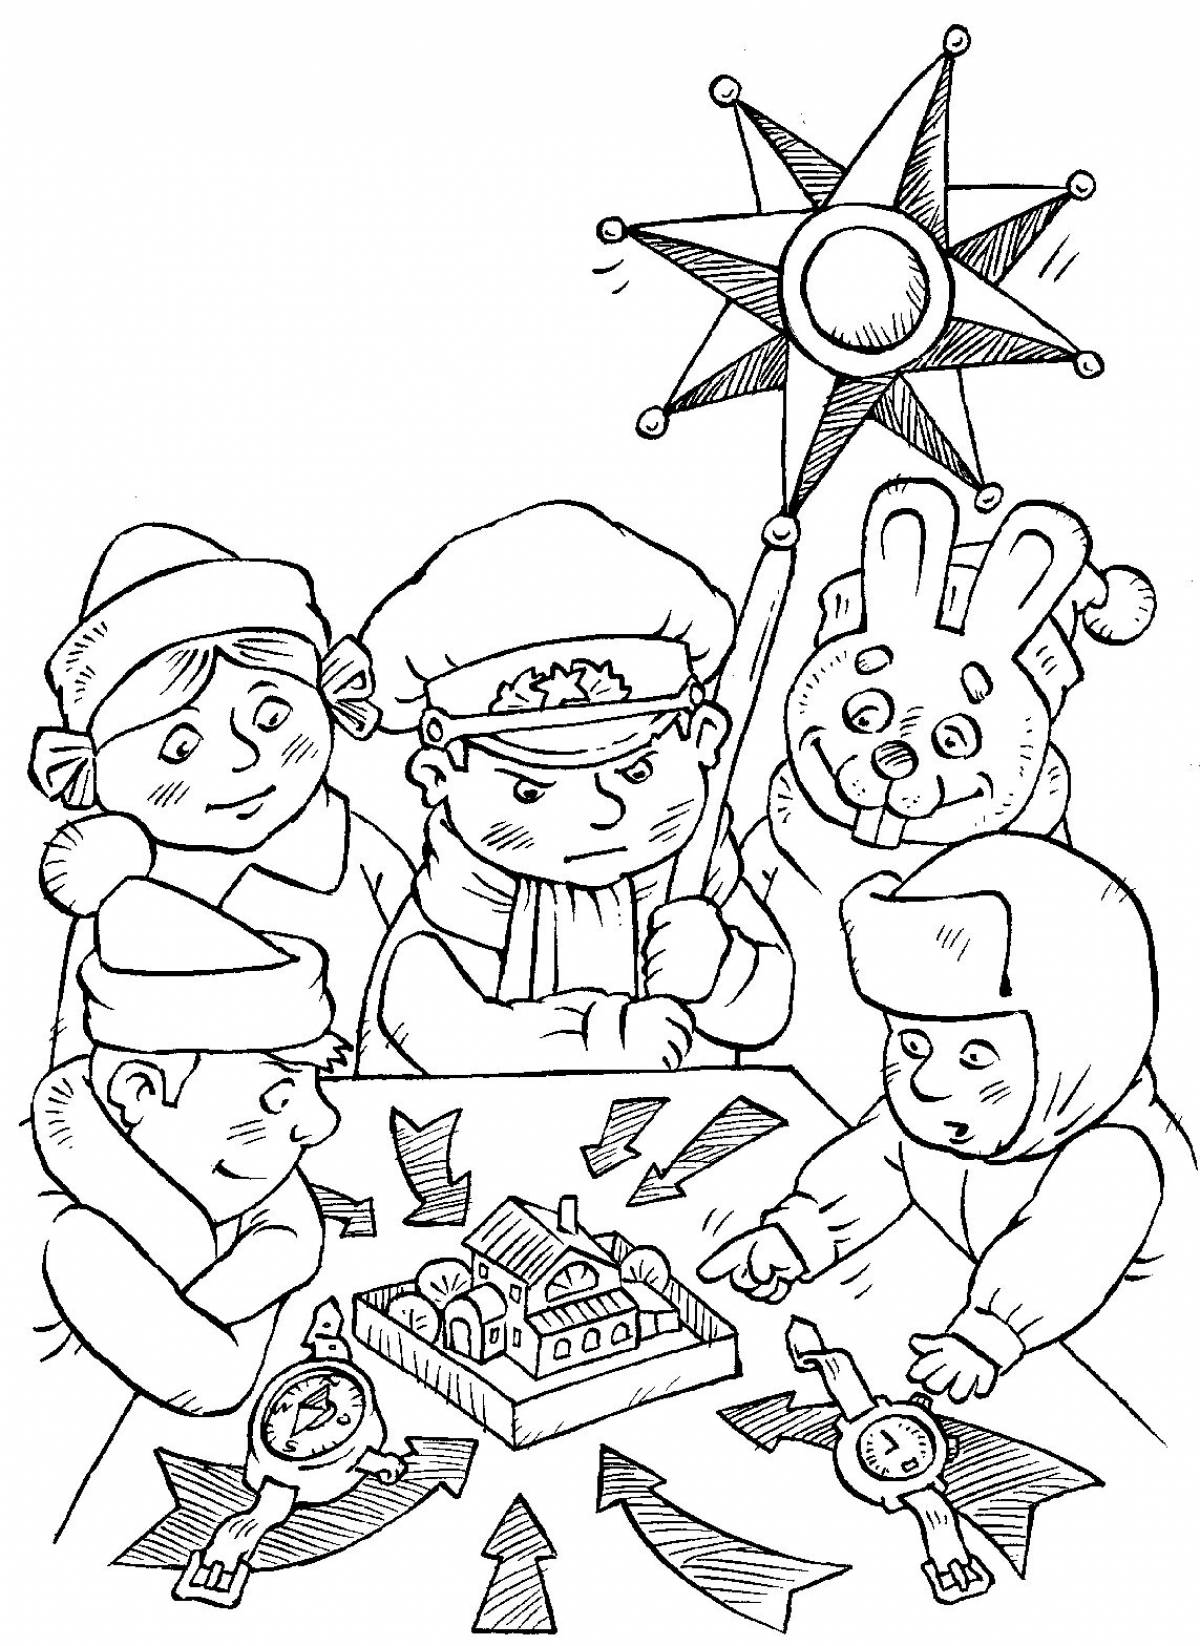 Shiny Christmas carol coloring book for kids